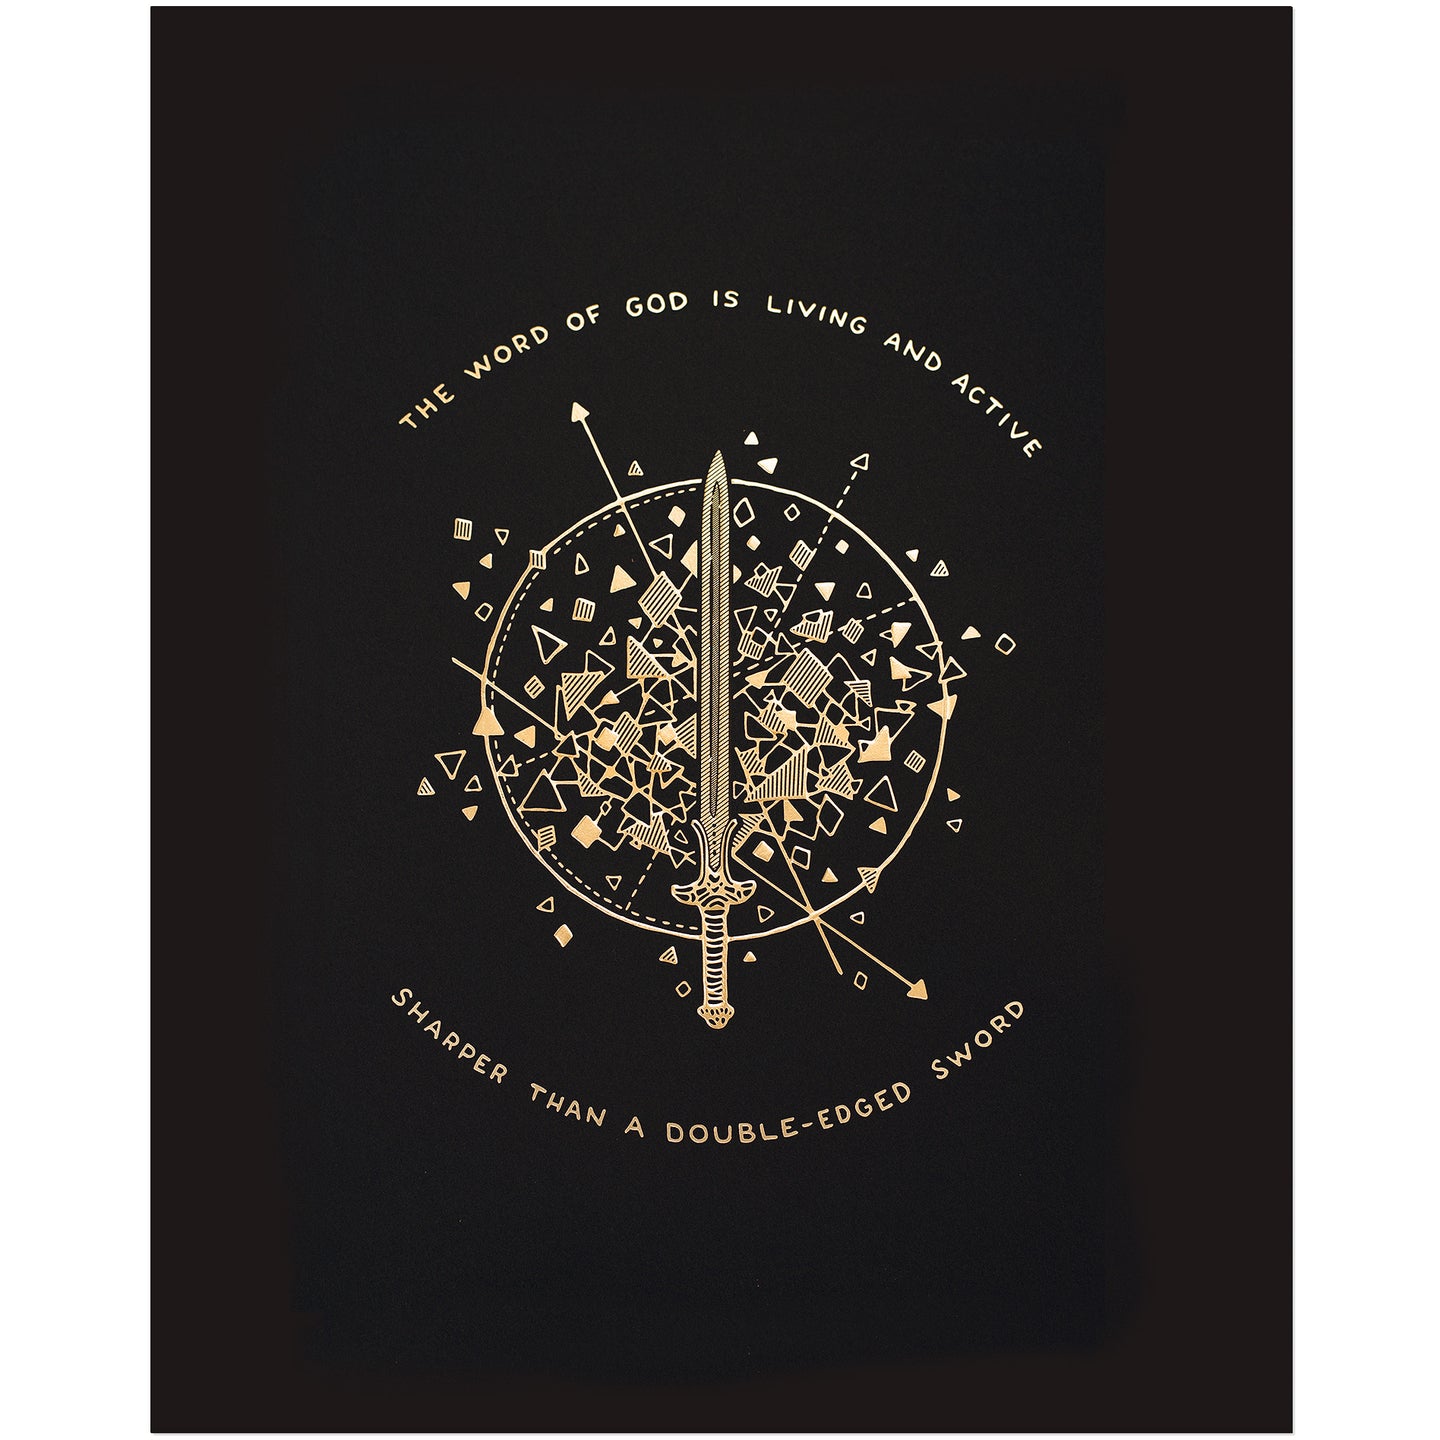 Sword of the Spirit - 16x20 Gold Emboss Print